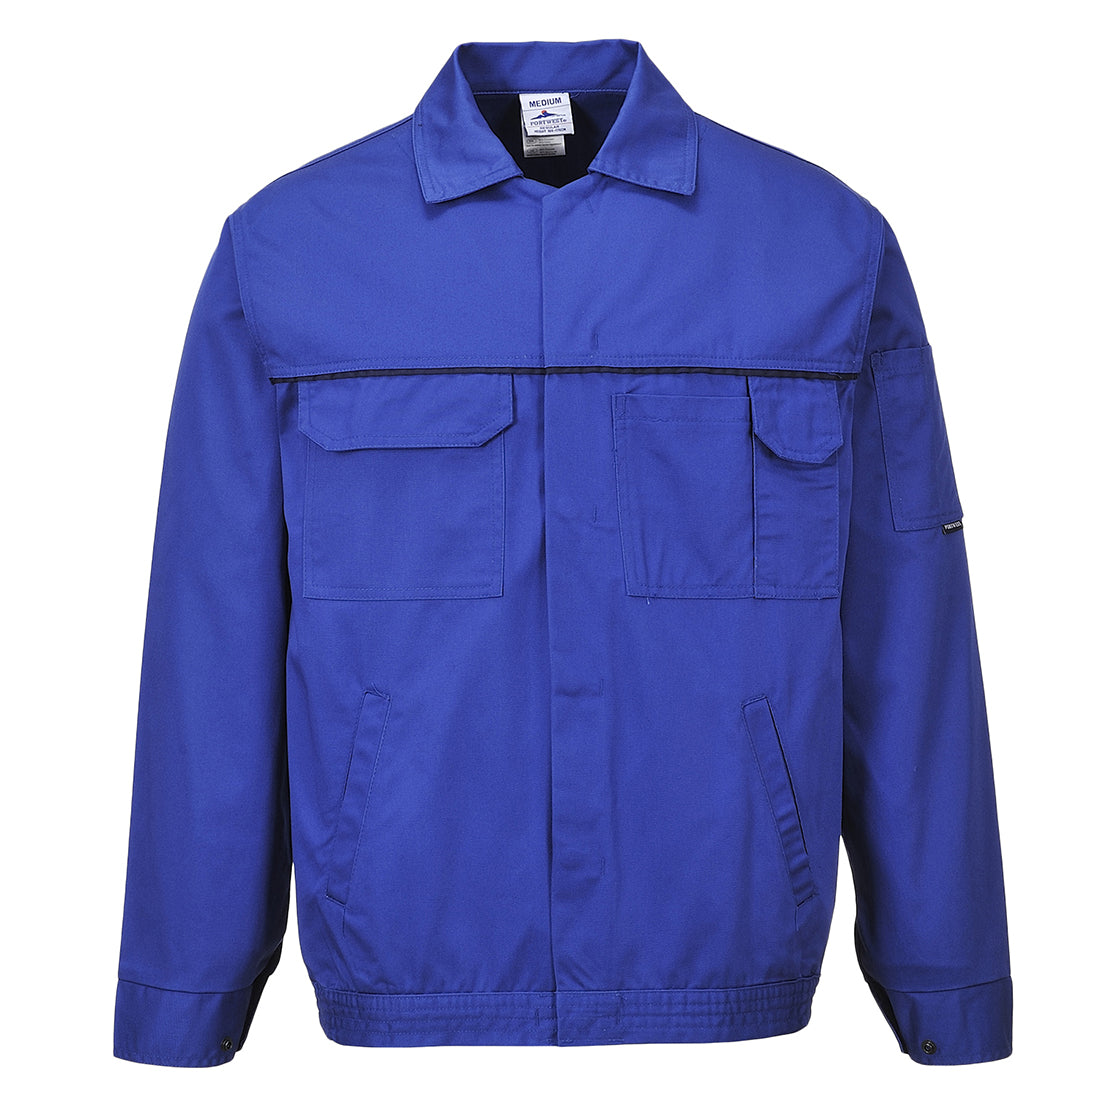 Portwest 2860 - Royal Blue Classic Work Jacket Coat sz Small Regular